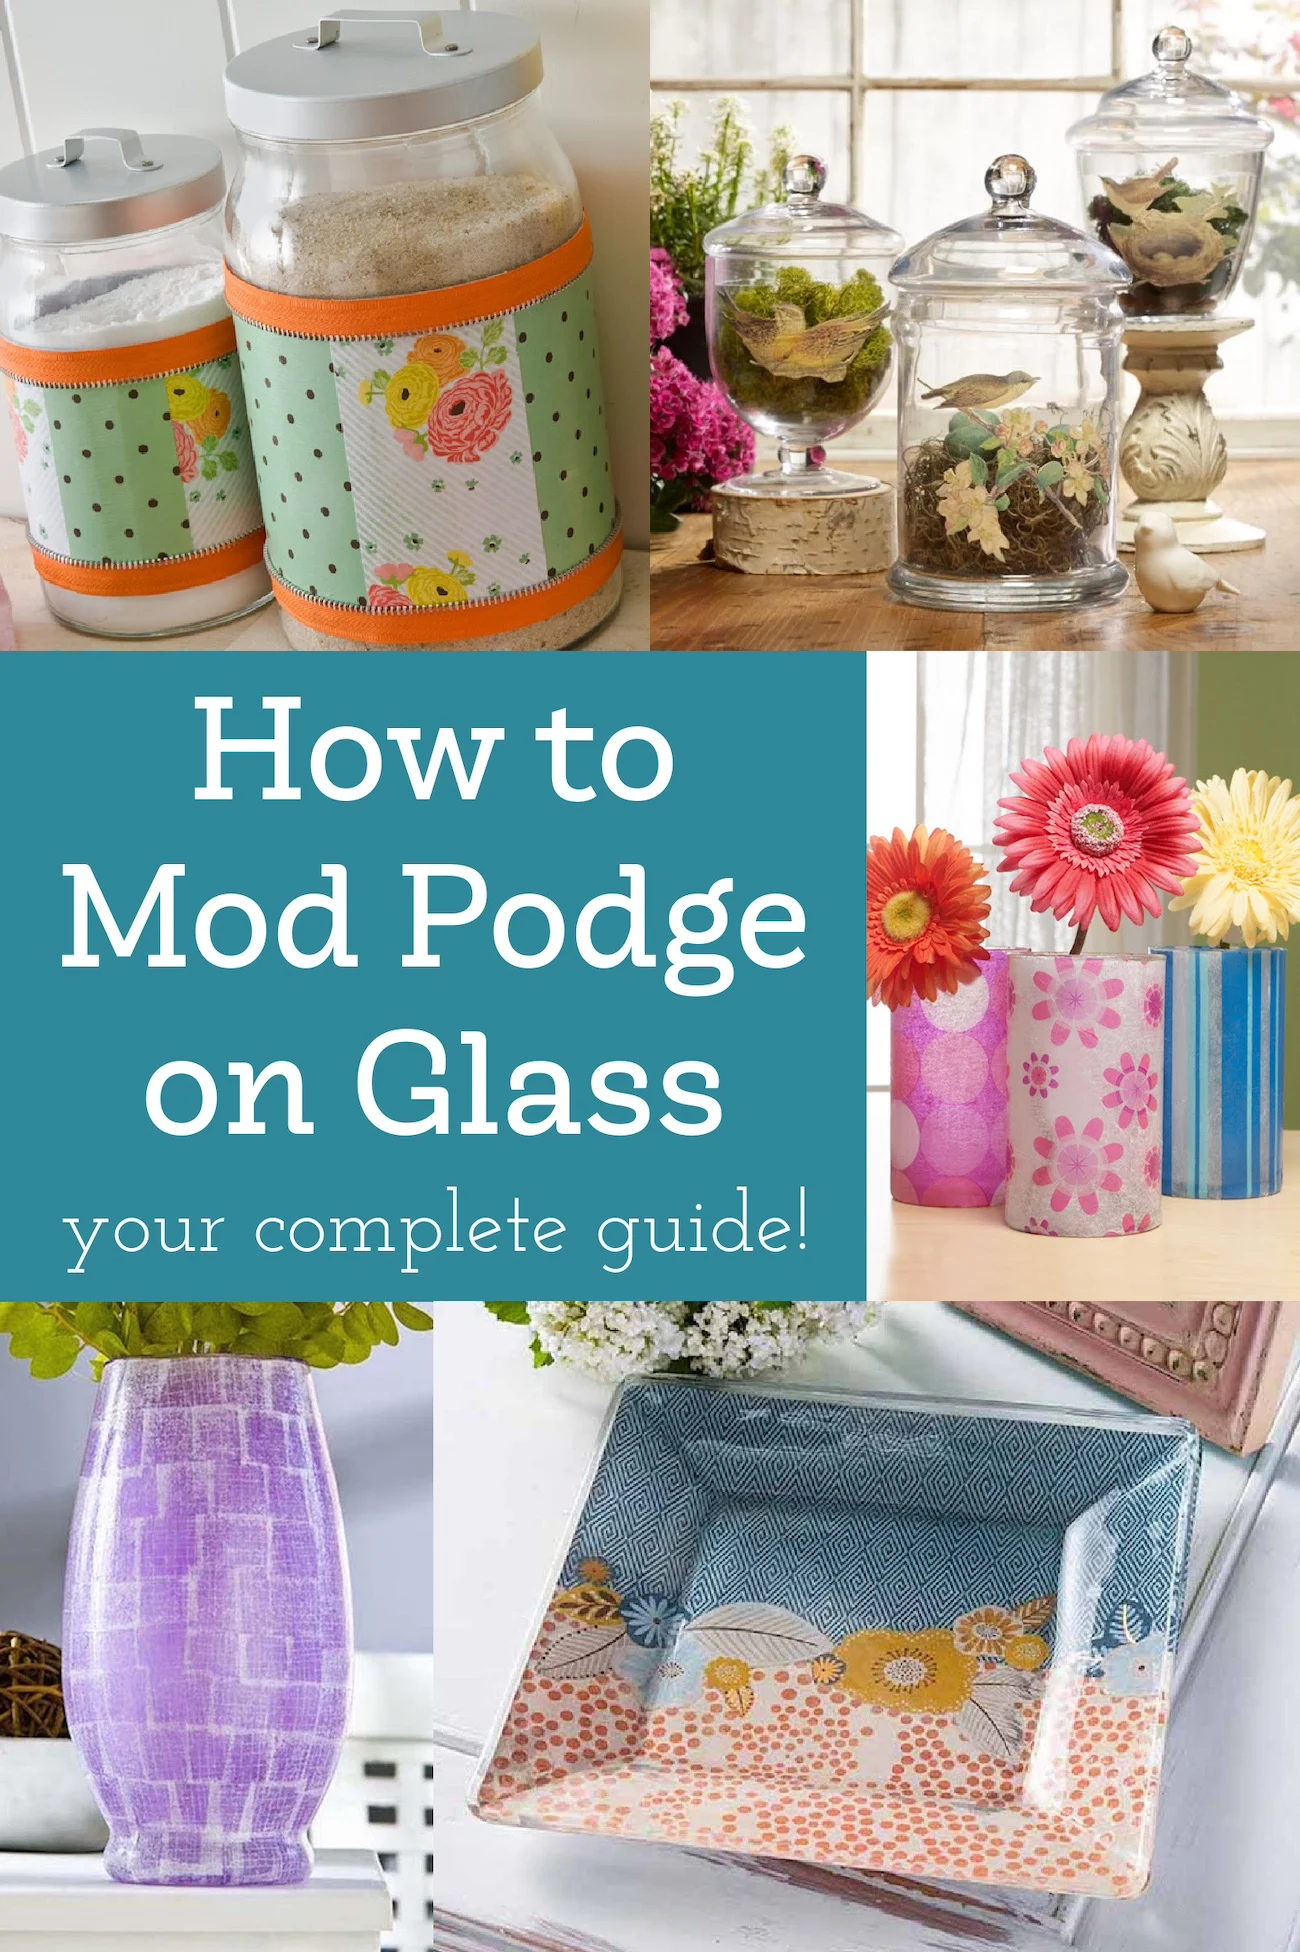 https://modpodgerocksblog.b-cdn.net/wp-content/uploads/2021/03/How-to-Mod-Podge-on-Glass-a-guide.jpg.webp